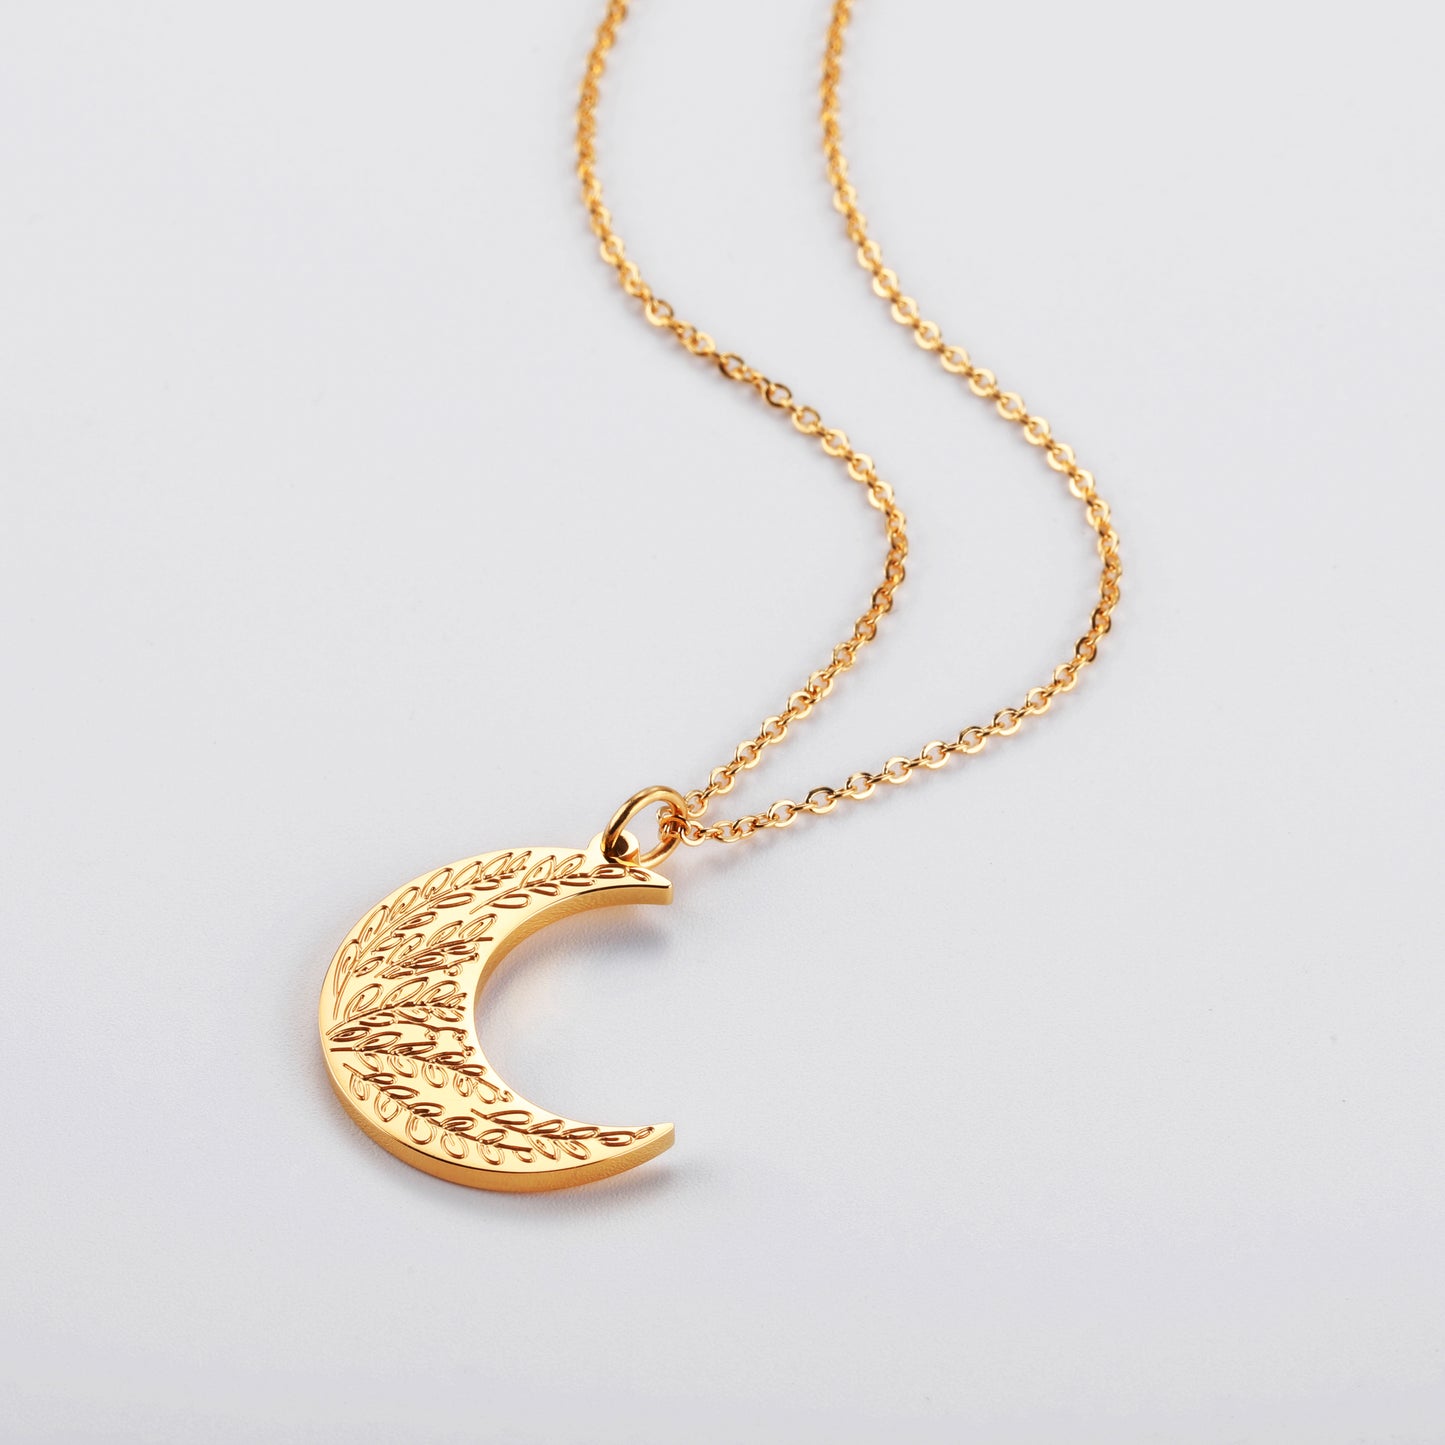 Darjali Jewelry Botanical Moon Necklace 18K Gold